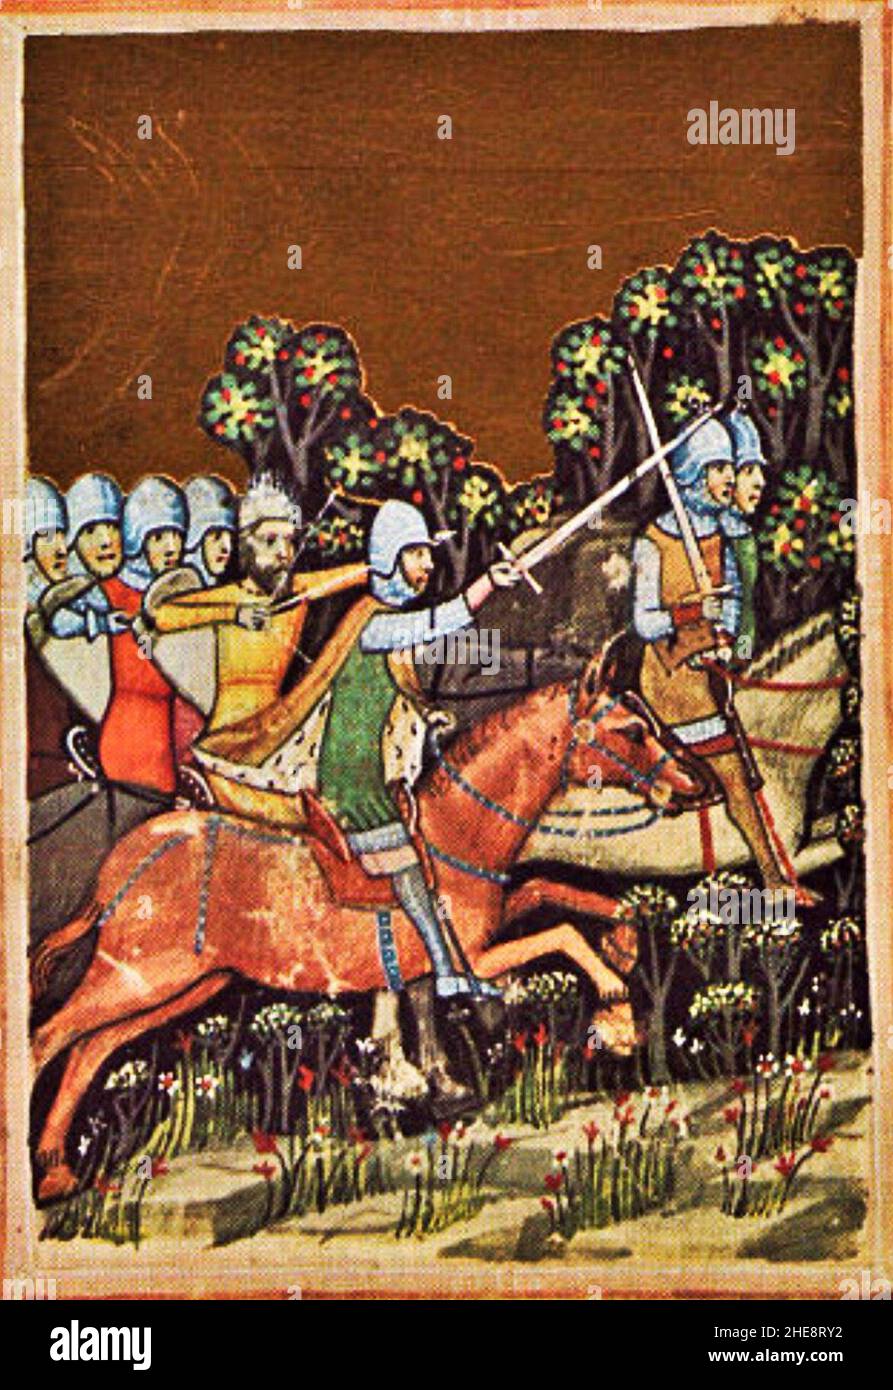 Samel pursuing Peter (Chronicon Pictum 047). Stock Photo